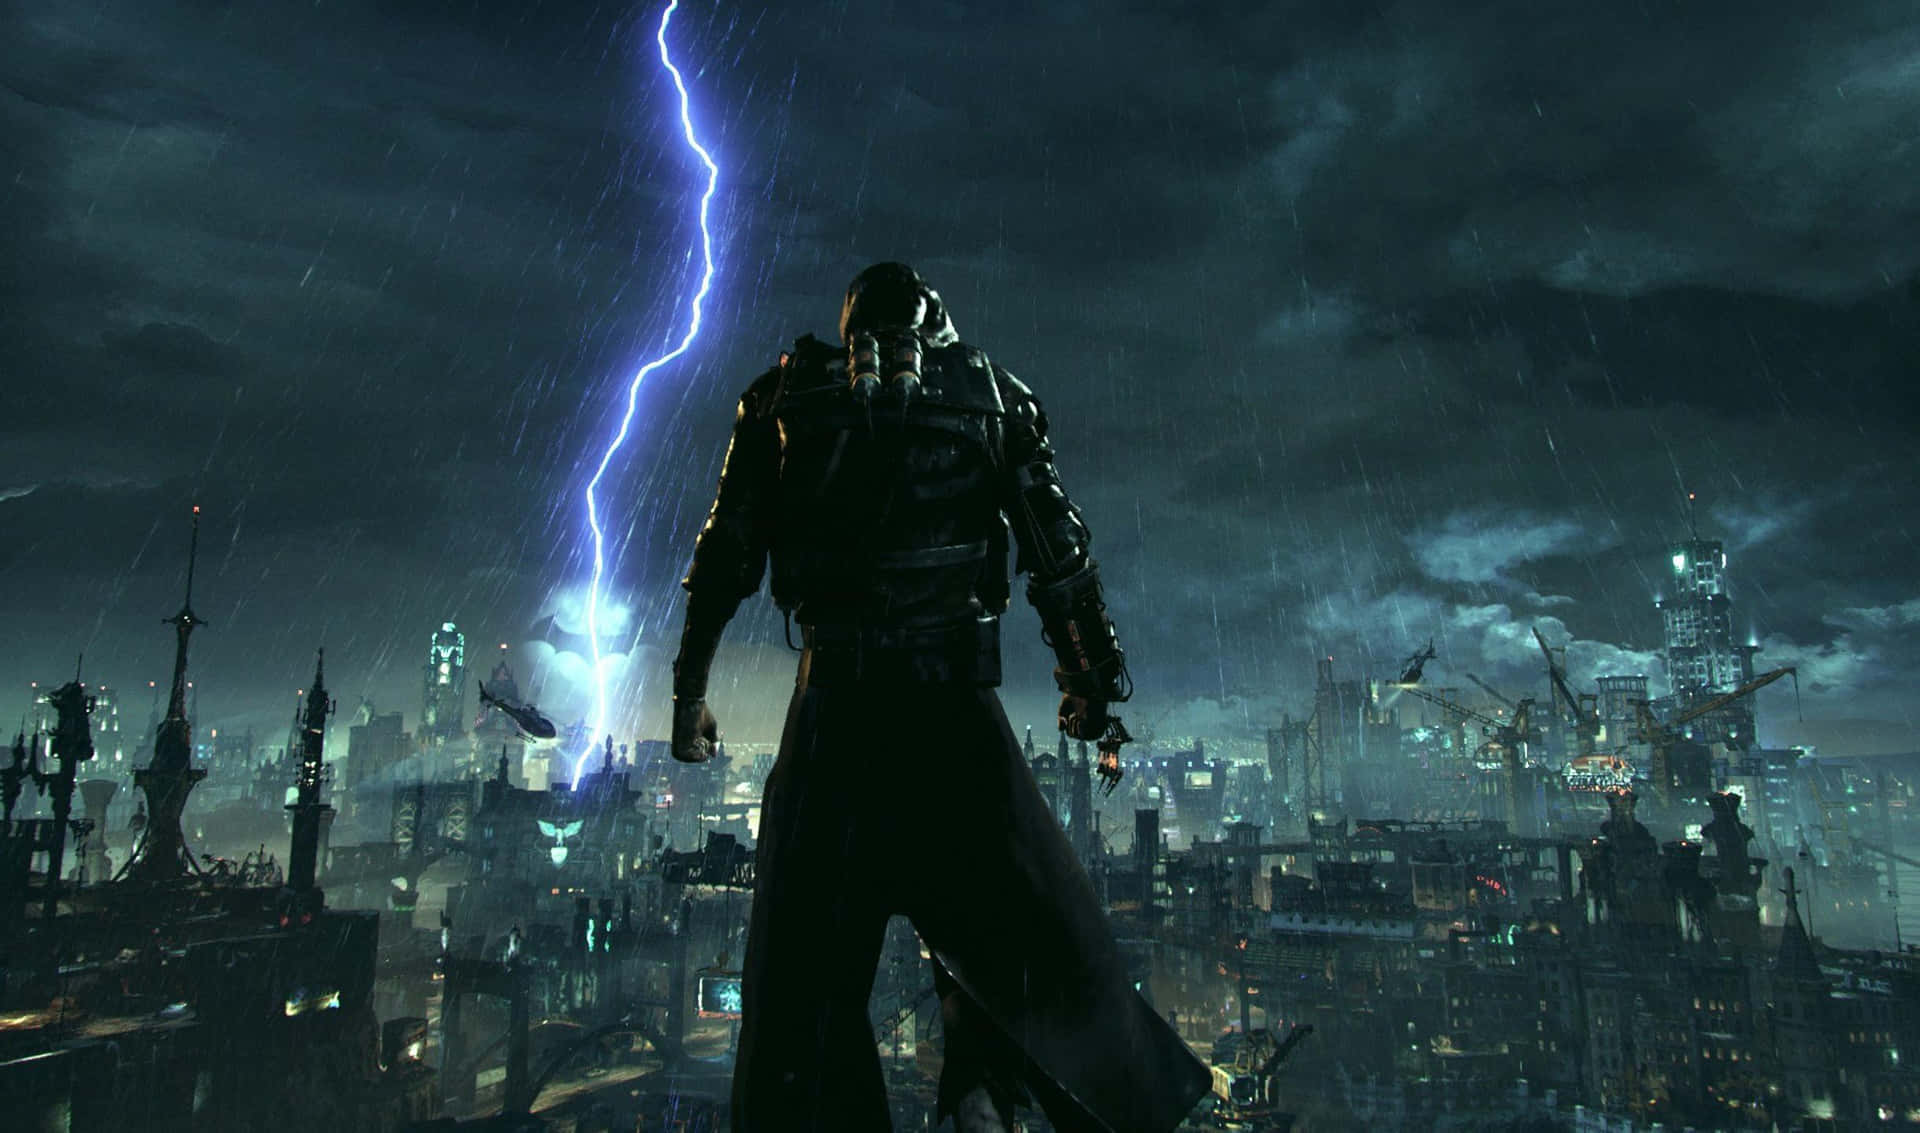 Dark Knight Soars over Arkham City